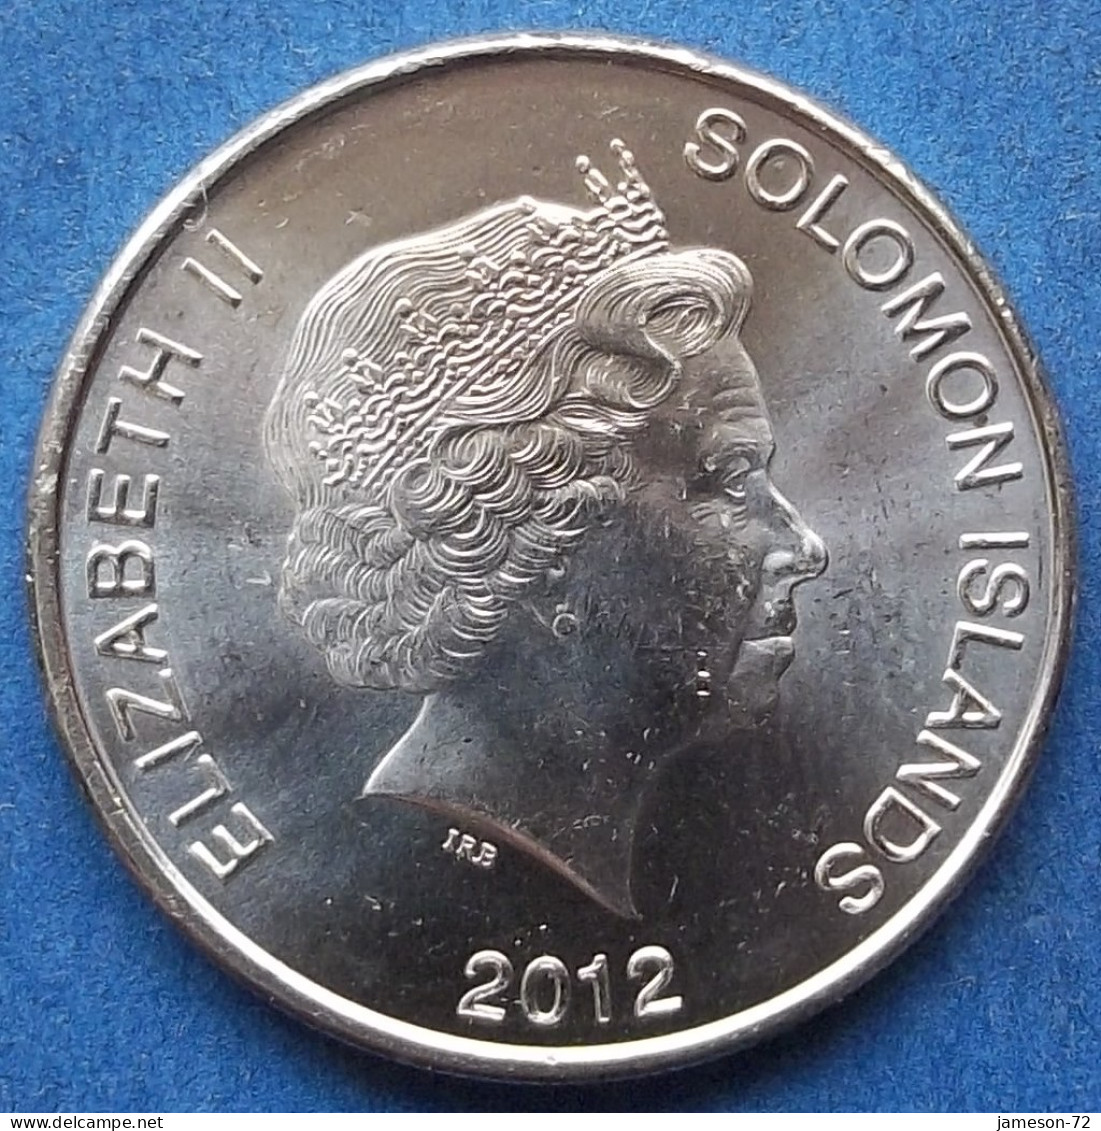 SOLOMON ISLANDS - 50 Censt 2012 "Eagle Spirit" KM# 237 Commonwealth Nation, Elizabeth II - Edelweiss Coins - Isole Salomon